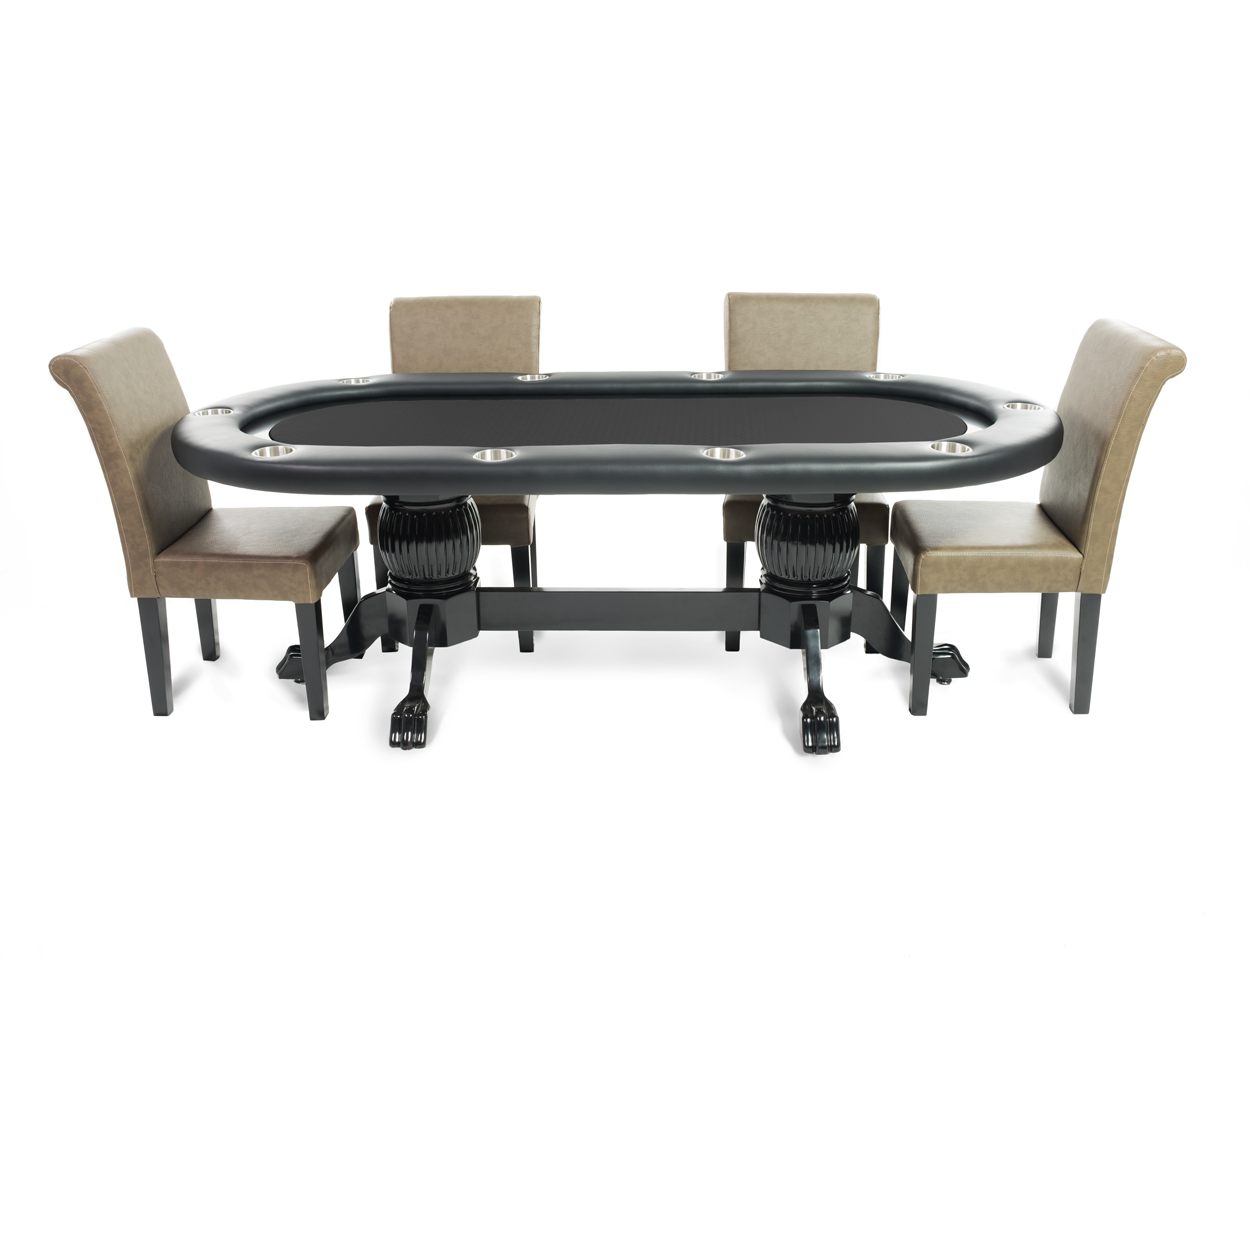 Bbo the elite poker table 4 lounge heritage